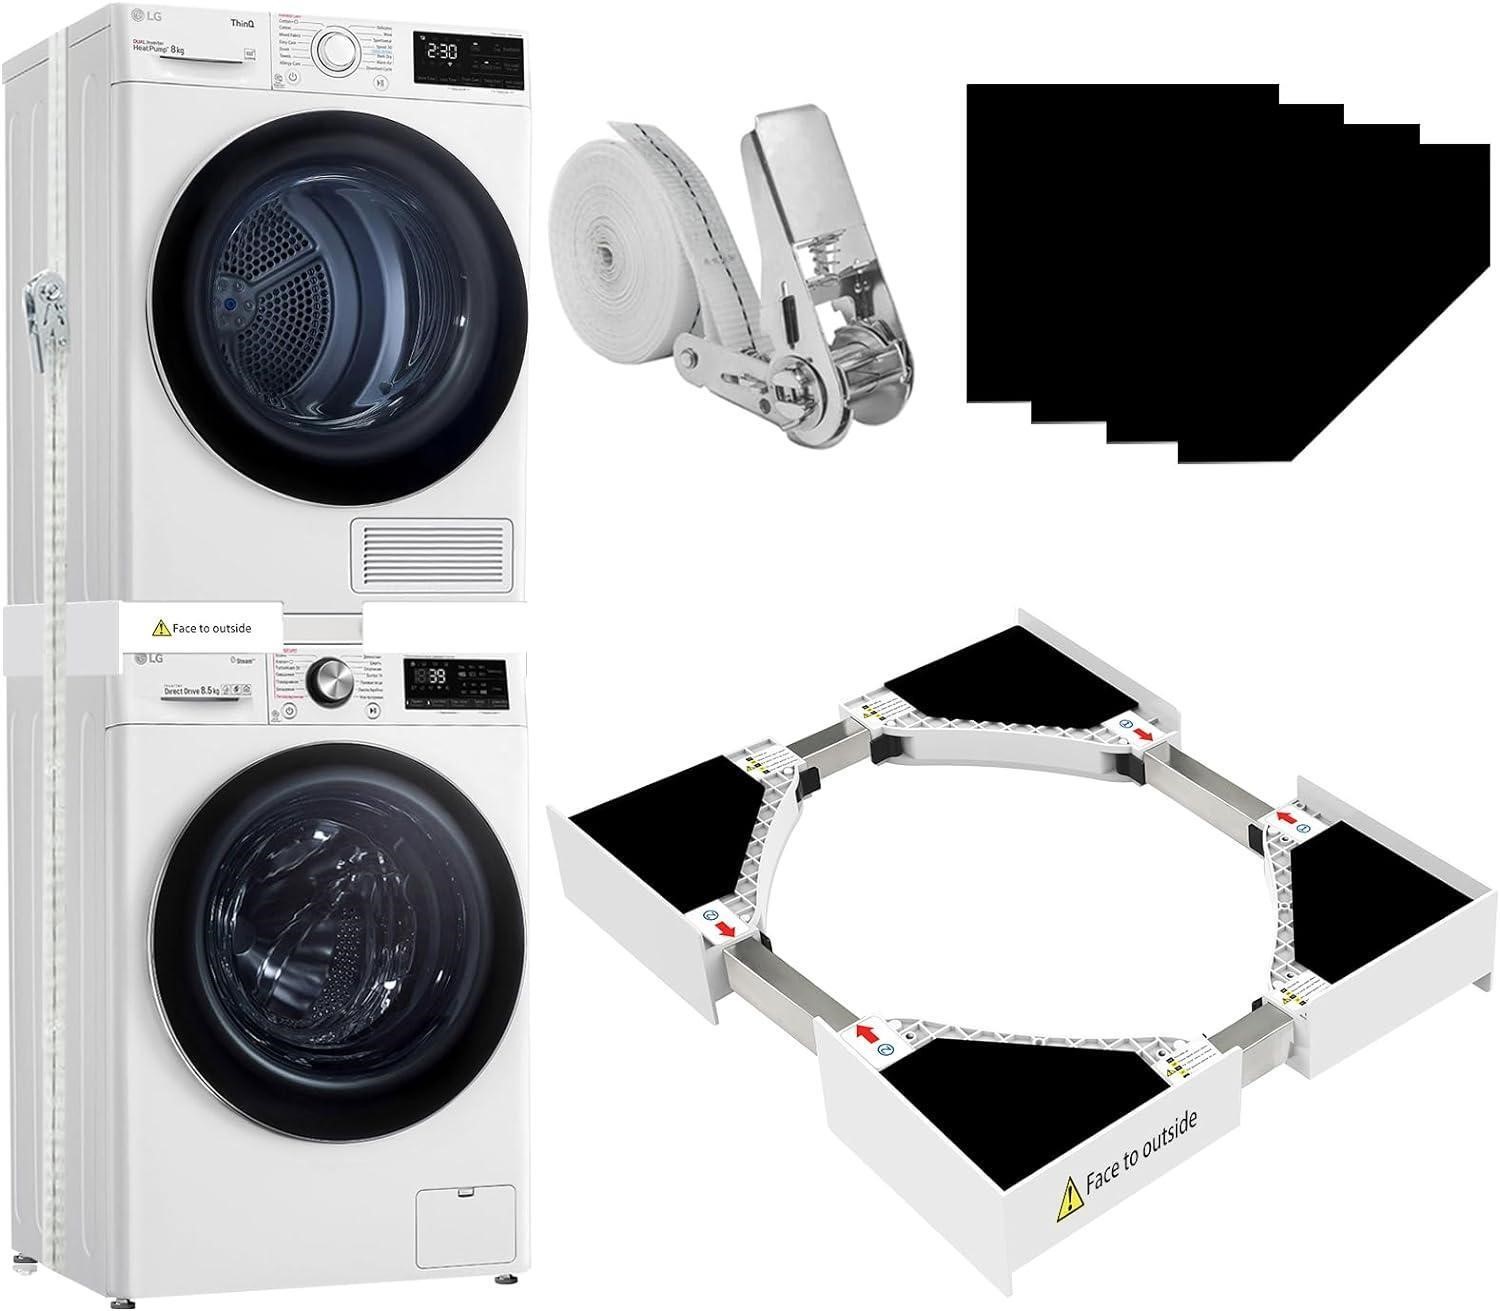 ULN - HHXRISE Universal Washer Dryer Kit